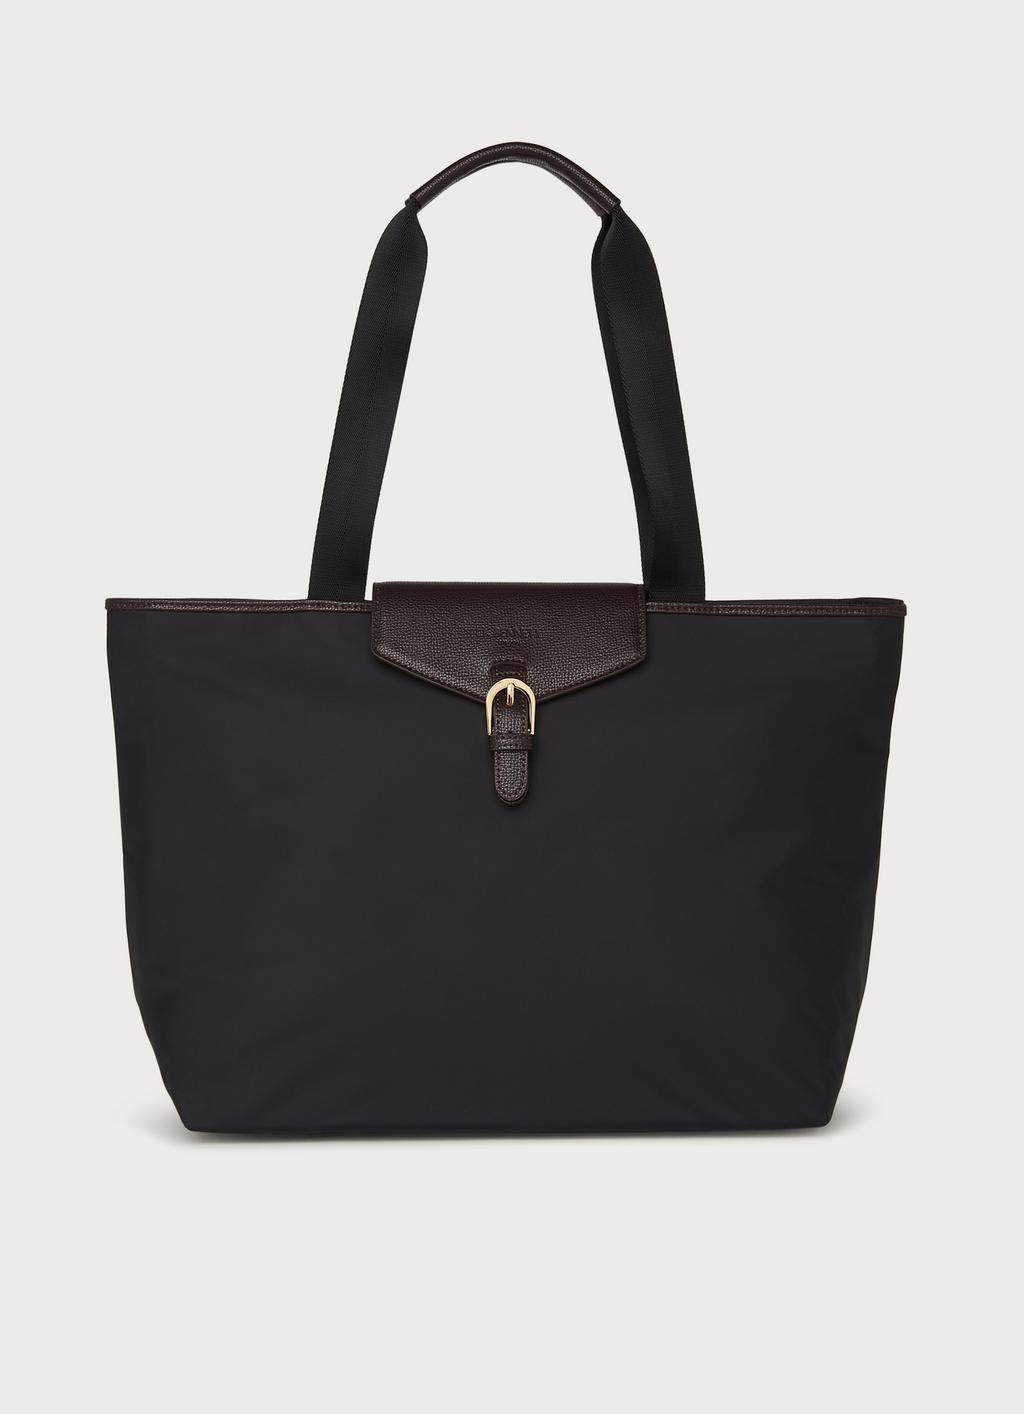 Lolita Black & Bordeaux Leather Tote Bag | Handbags | L.K.Bennett